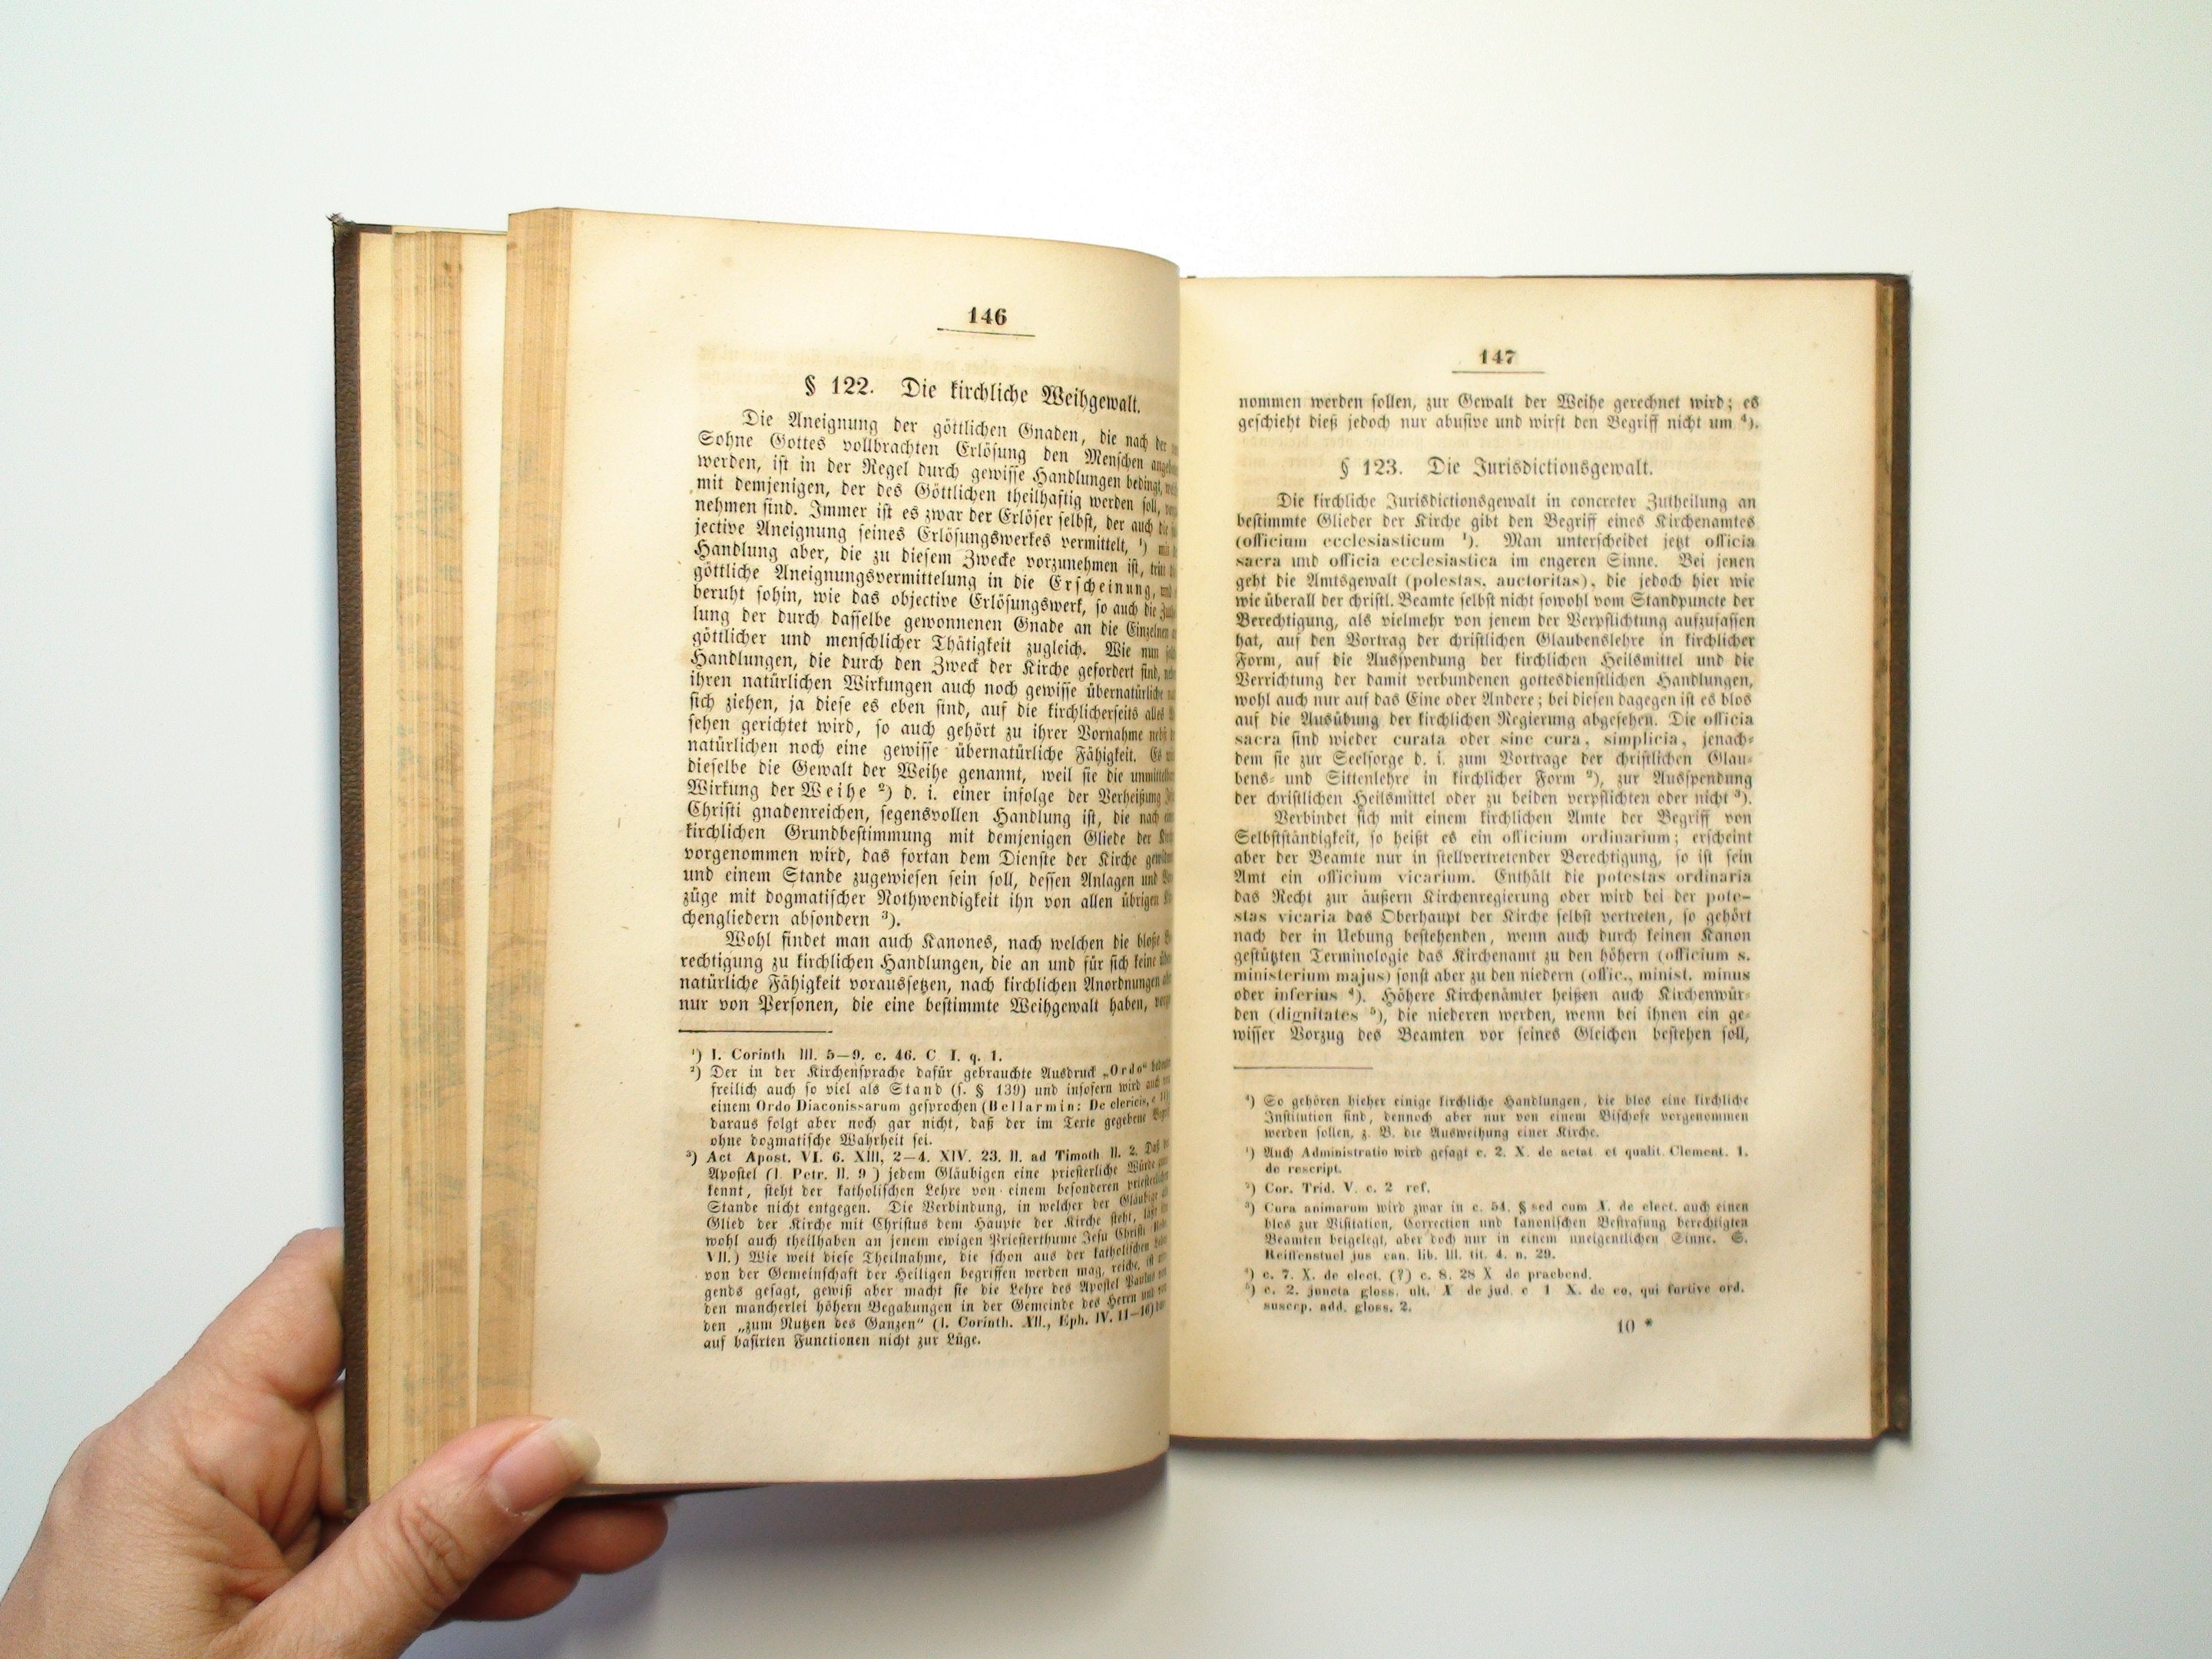 Lehrbuch des Kirchenrechtes, Theodor Pachmann, Complete in 2 Parts, 3 Vol, 1851